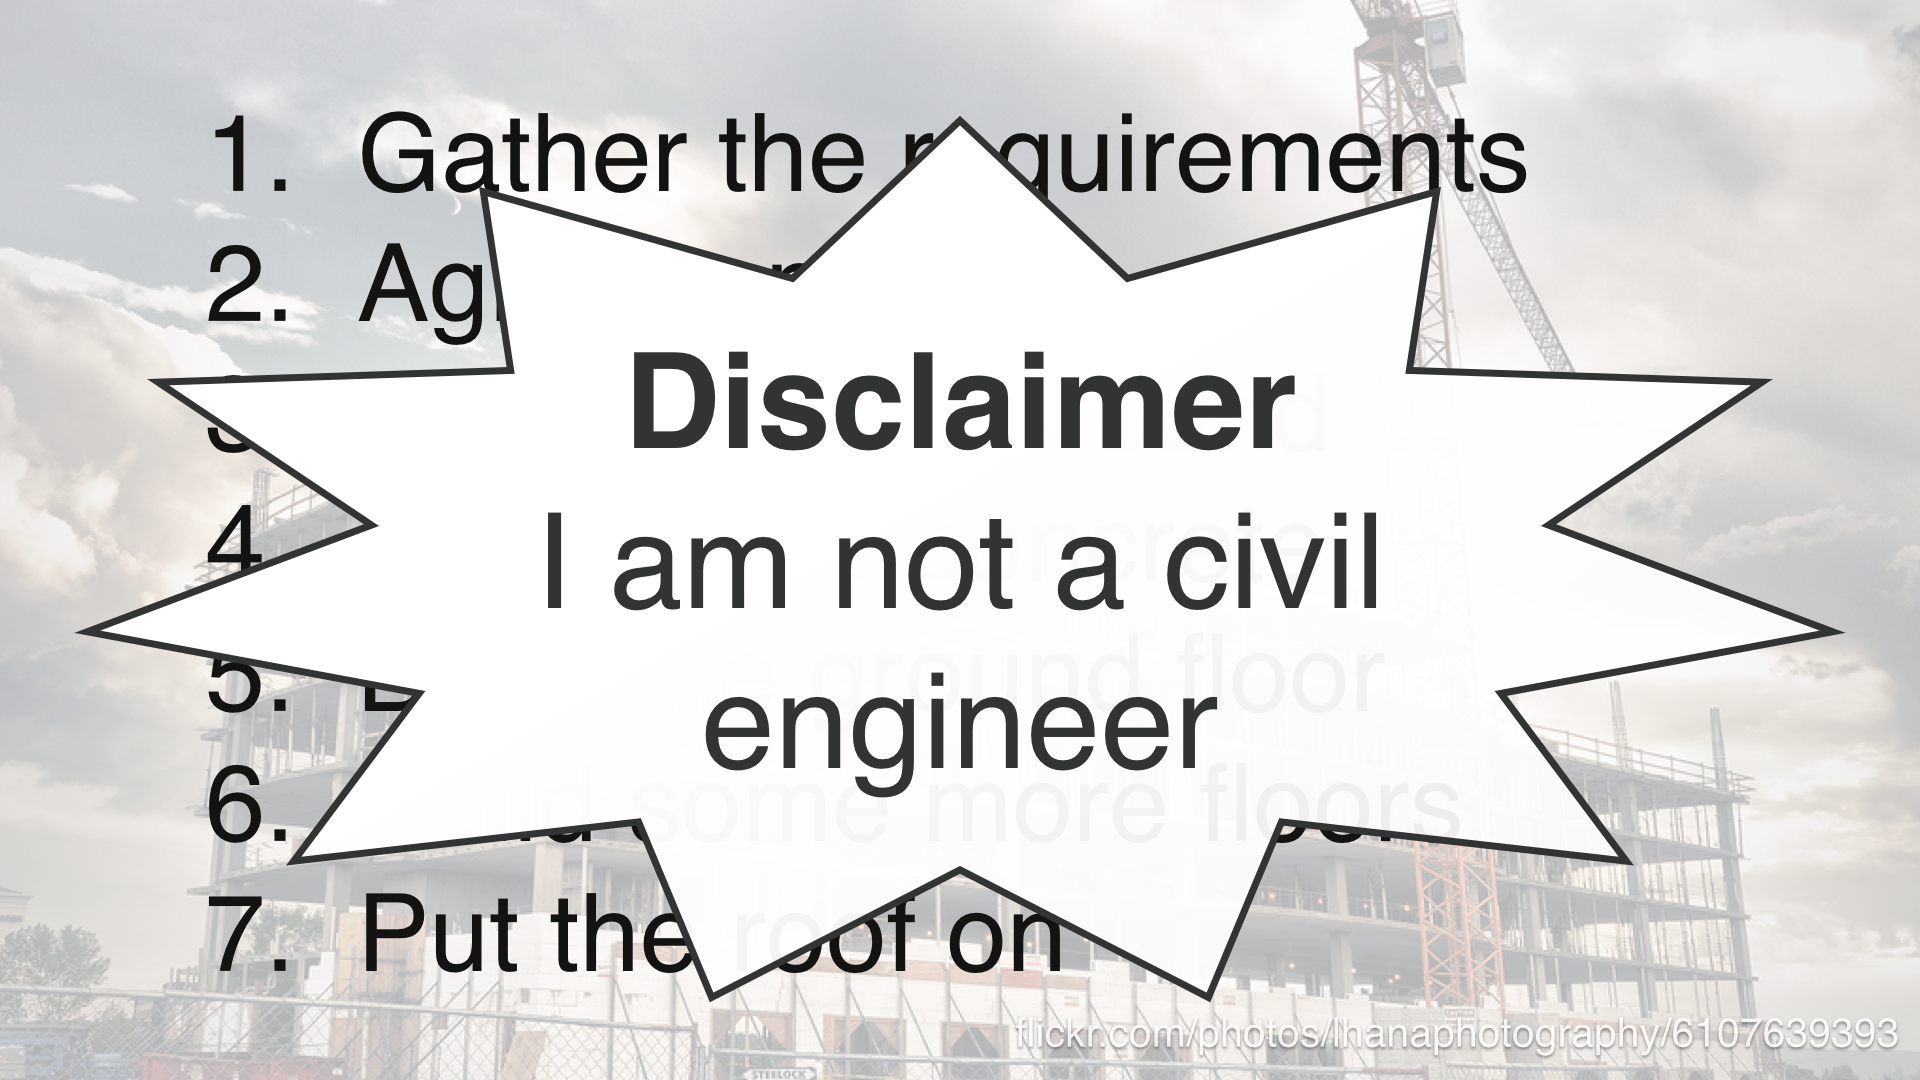 "Disclaimer: I am not a civil engineer!"